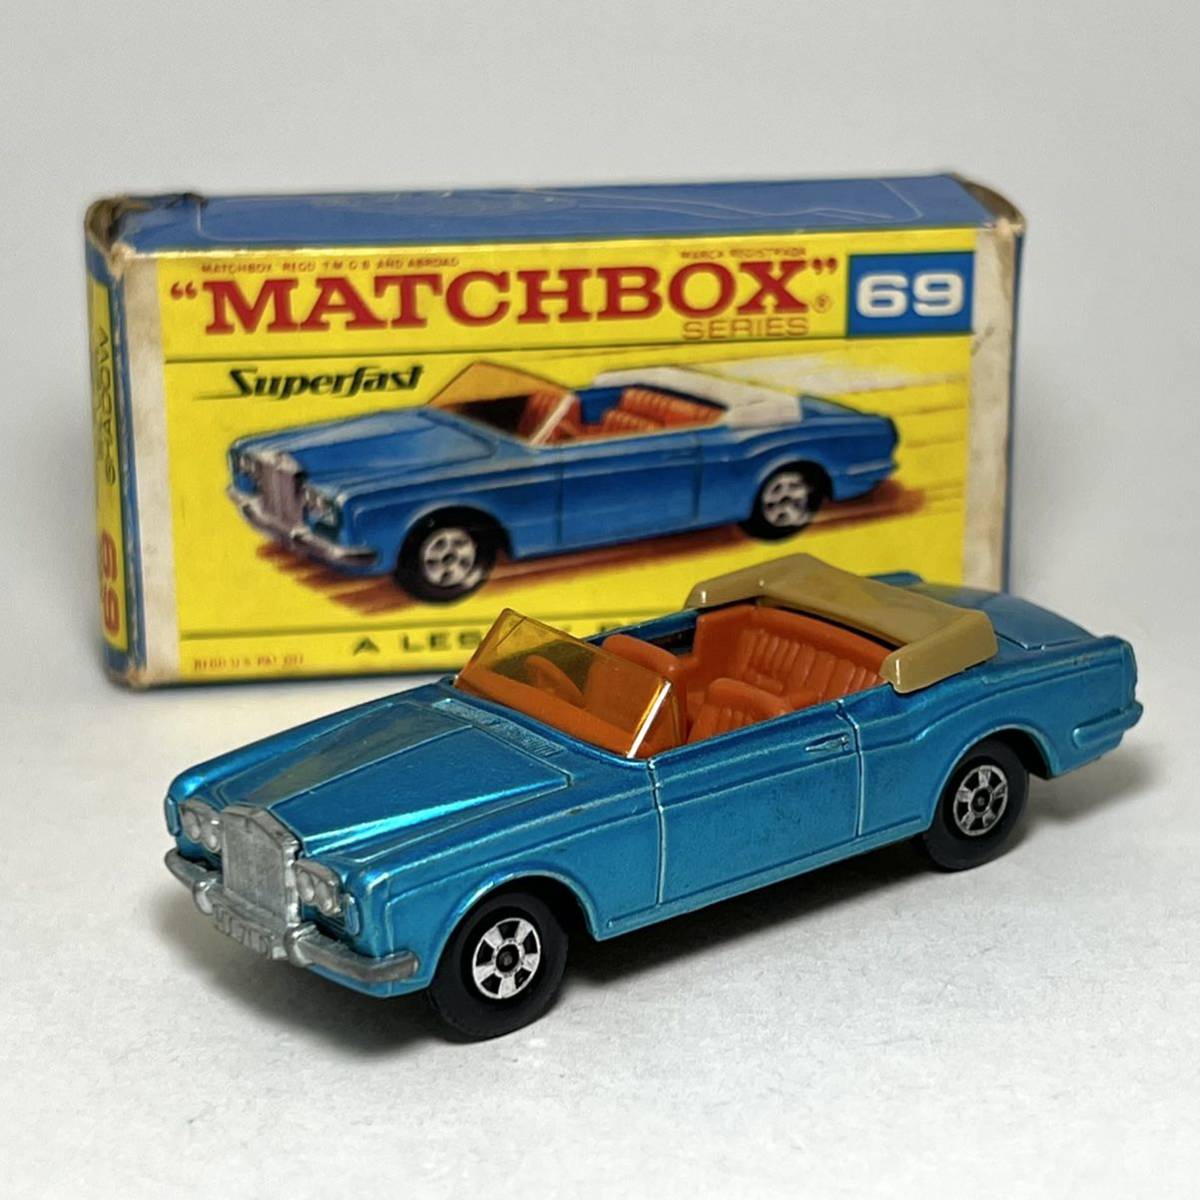 【MB】No.69 ロールスロイス シルバーシャドウ (青) Rolls Royce Silver Shadow Superfast Lesney Matchbox マッチボックス